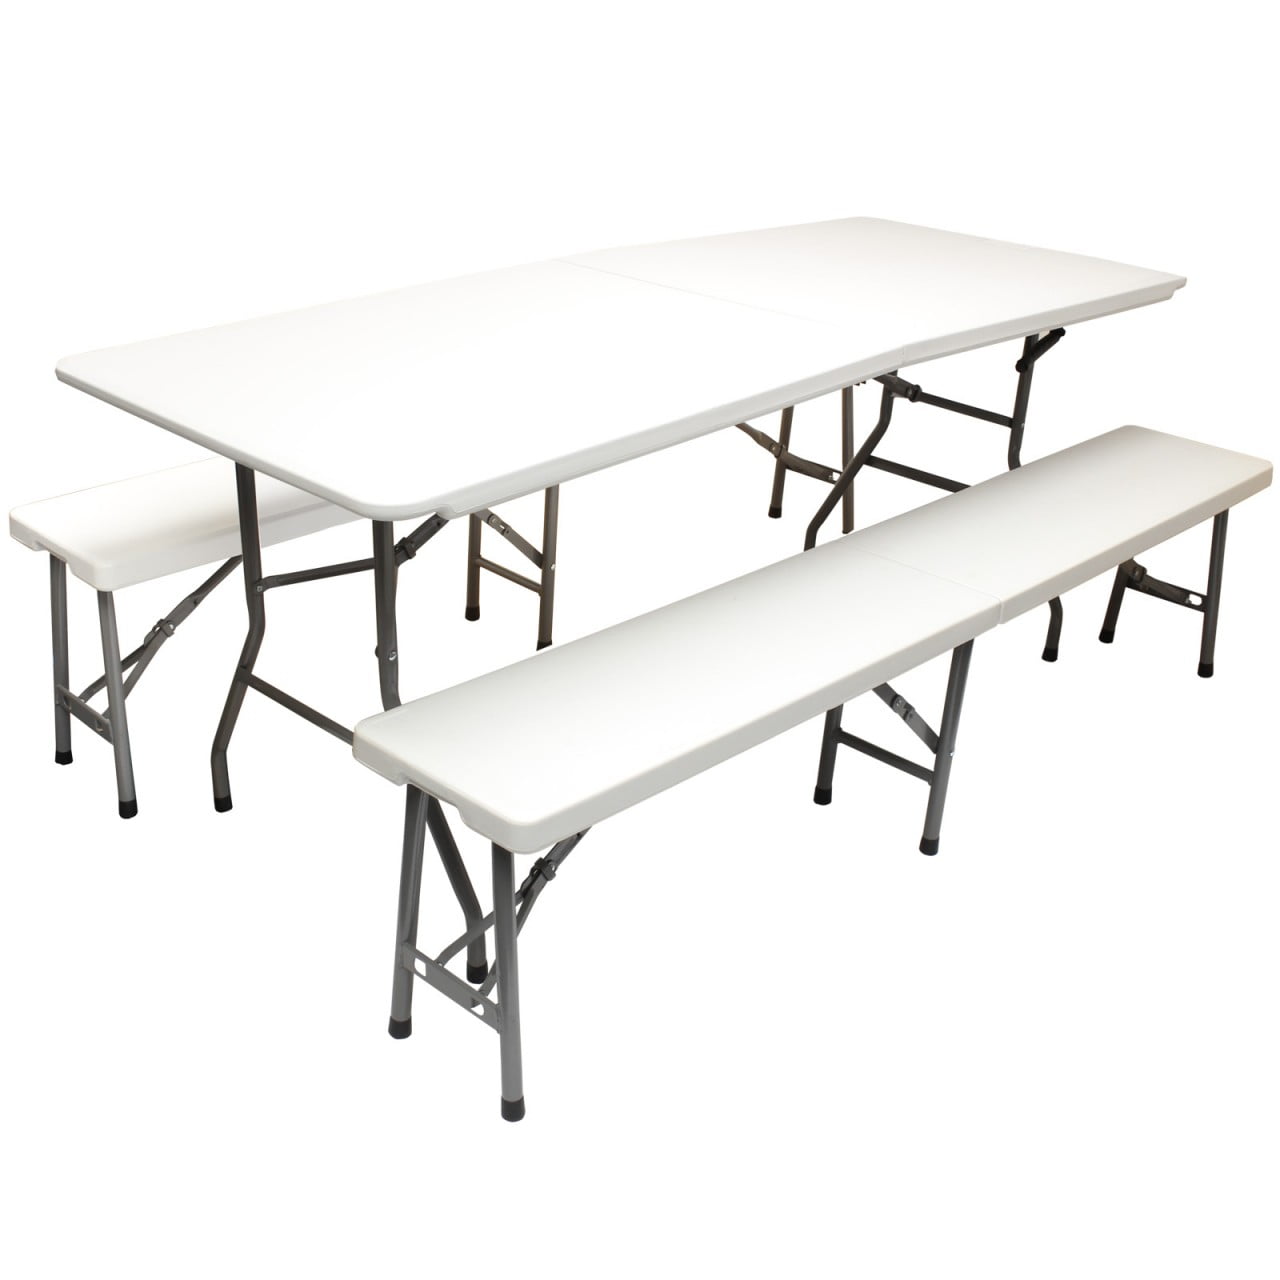 Ubesgoo Portable Folding Table And Bench Set6ft Folding Table